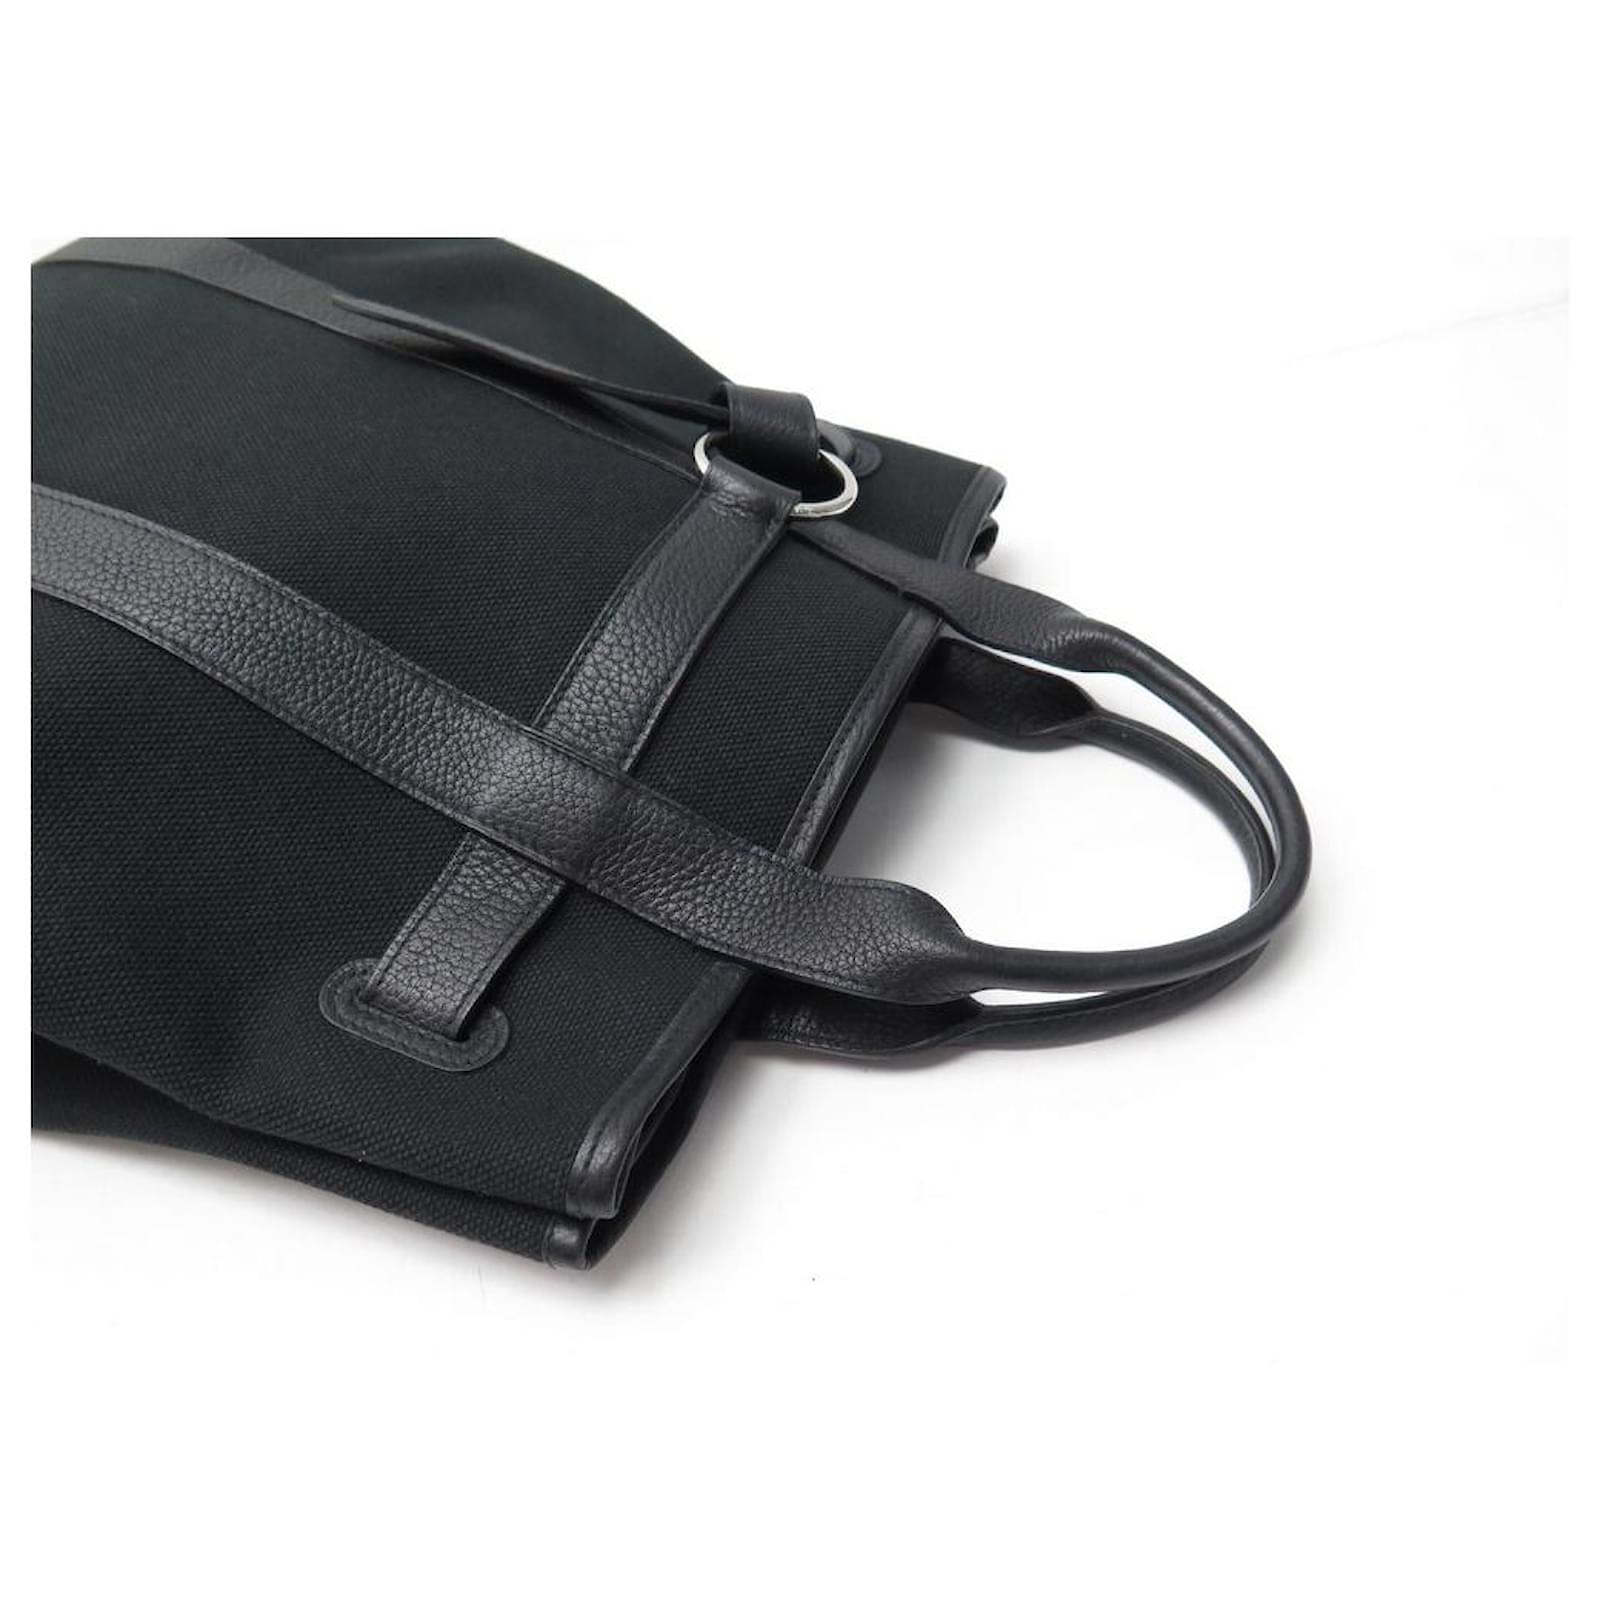 Handbags Hermès New Hermes Small Belt Handbag 32 Canvas & Togo Leather Black Tote Bag